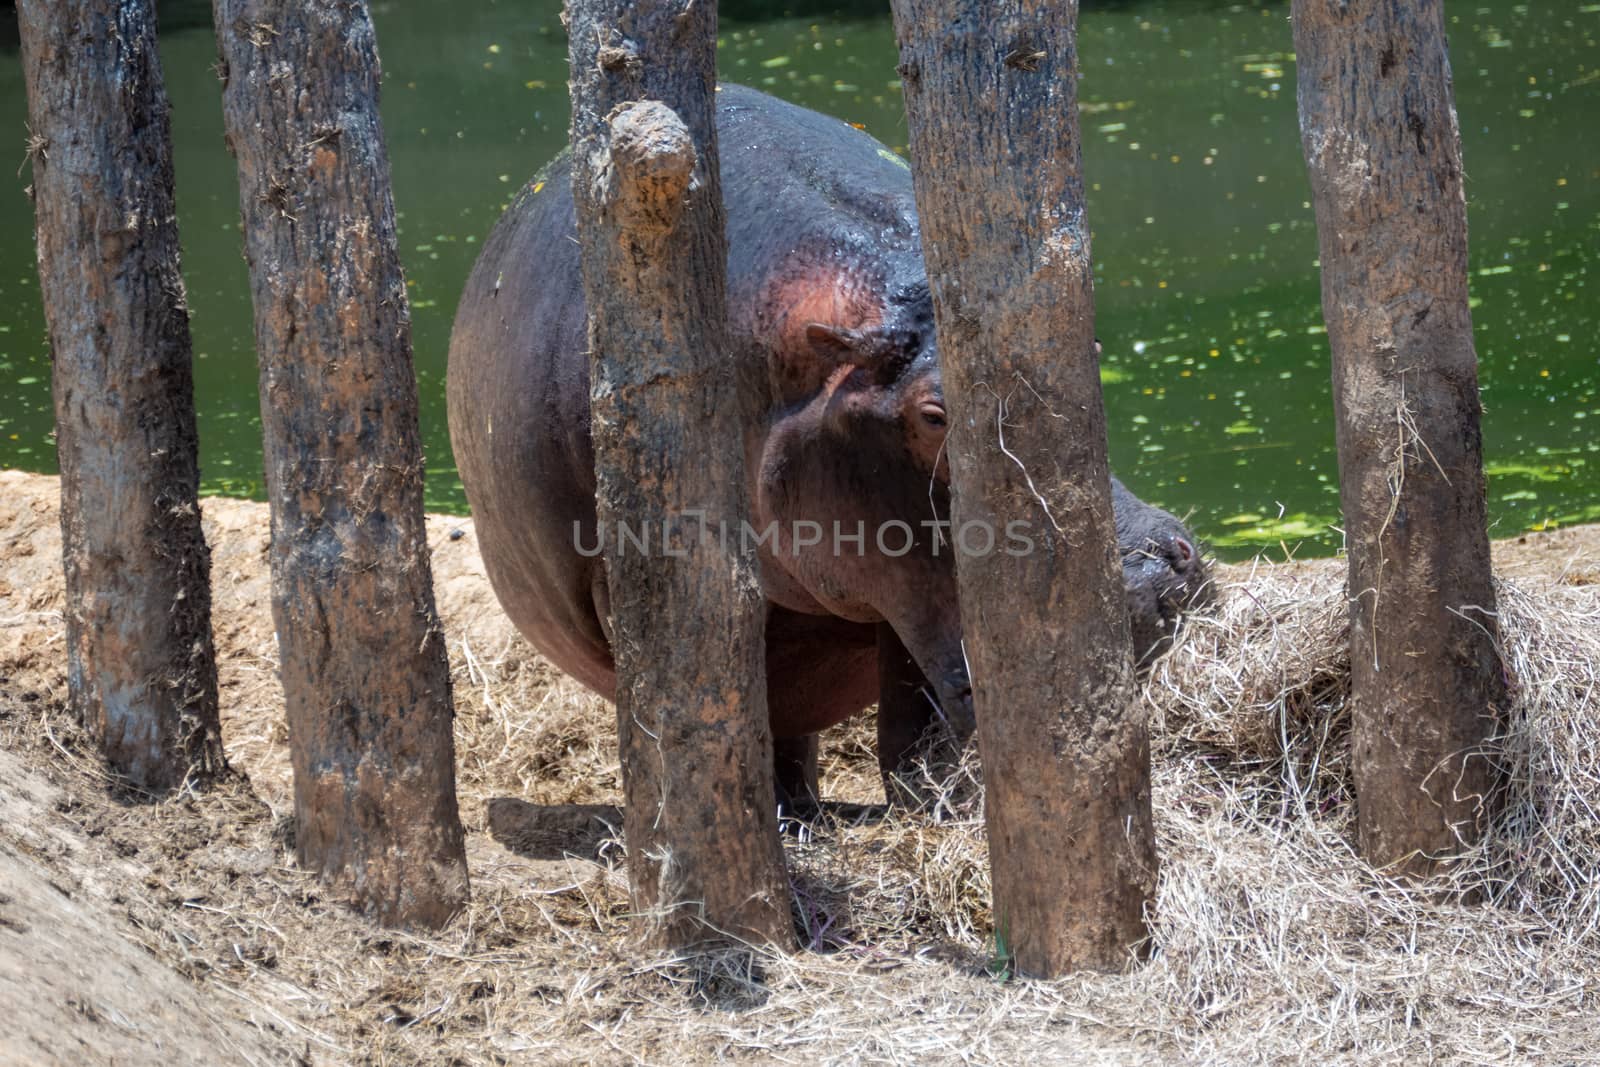 Rhino in enlosed area by lake by imagesbykenny